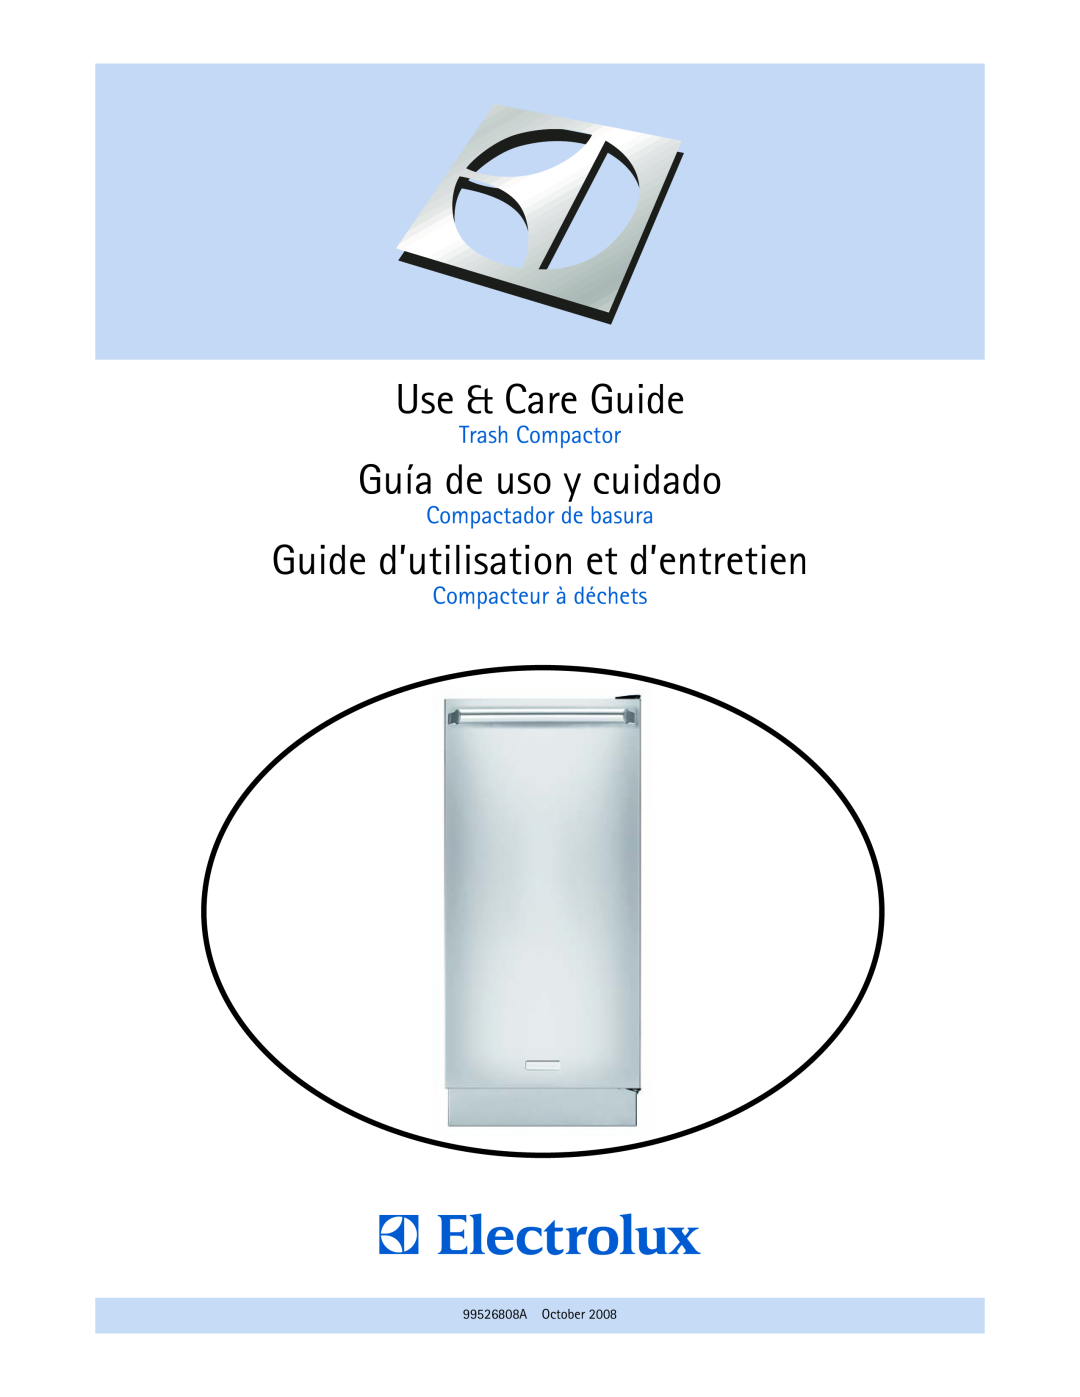 Electrolux E15TC75HPS manual Use & Care Guide, Guía de uso y cuidado, Guide d’utilisation et d’entretien, Trash Compactor 